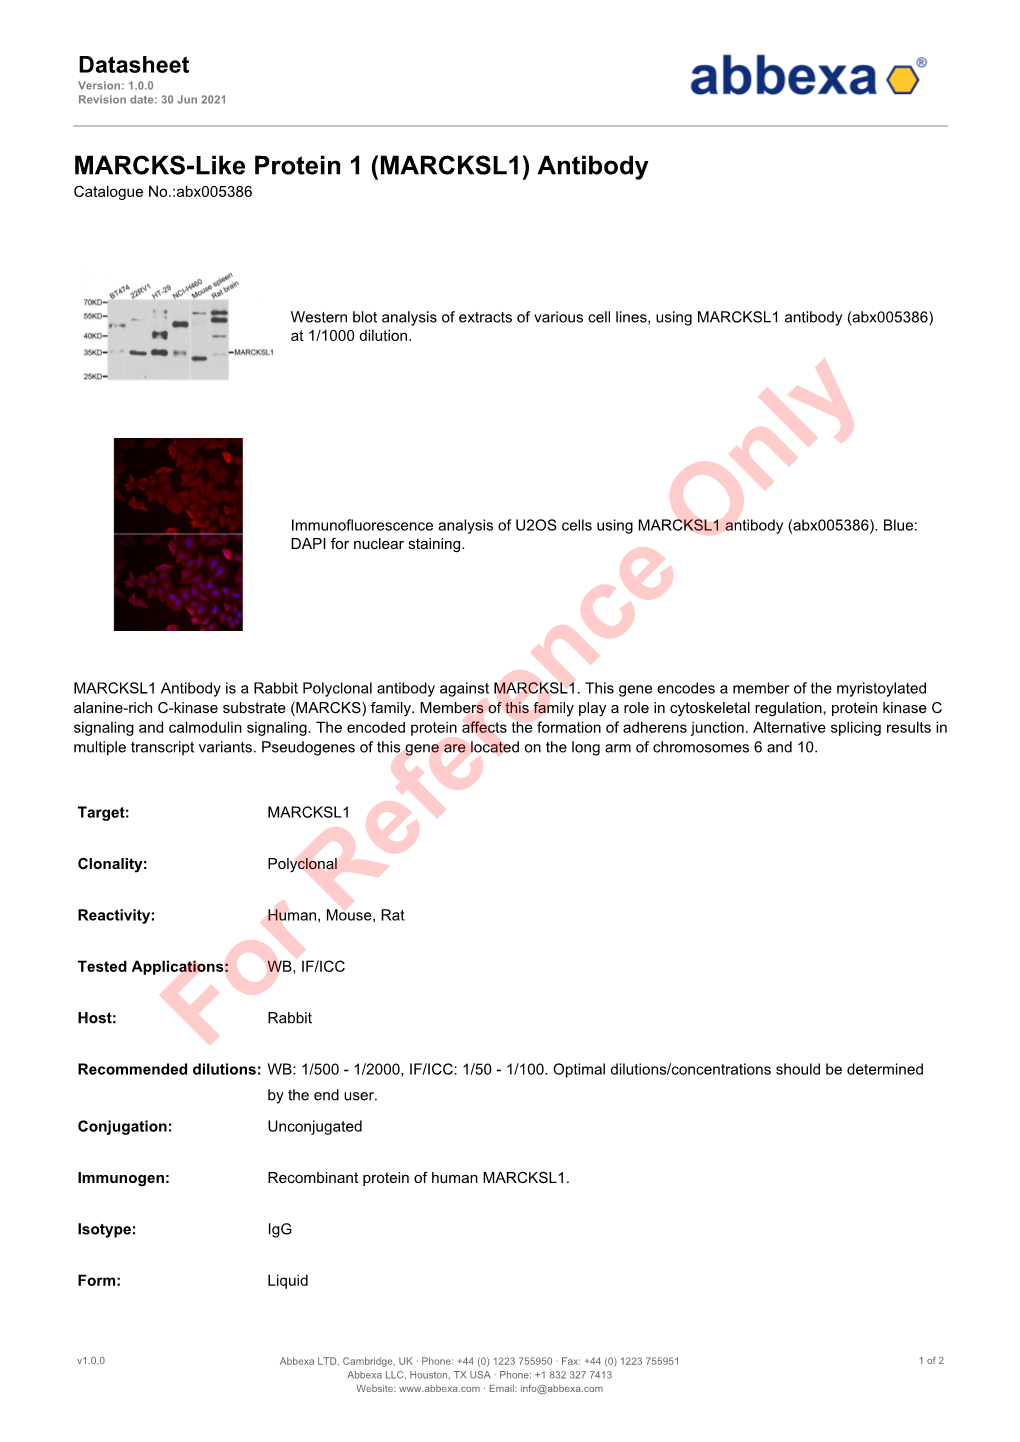 (MARCKSL1) Antibody Catalogue No.:Abx005386